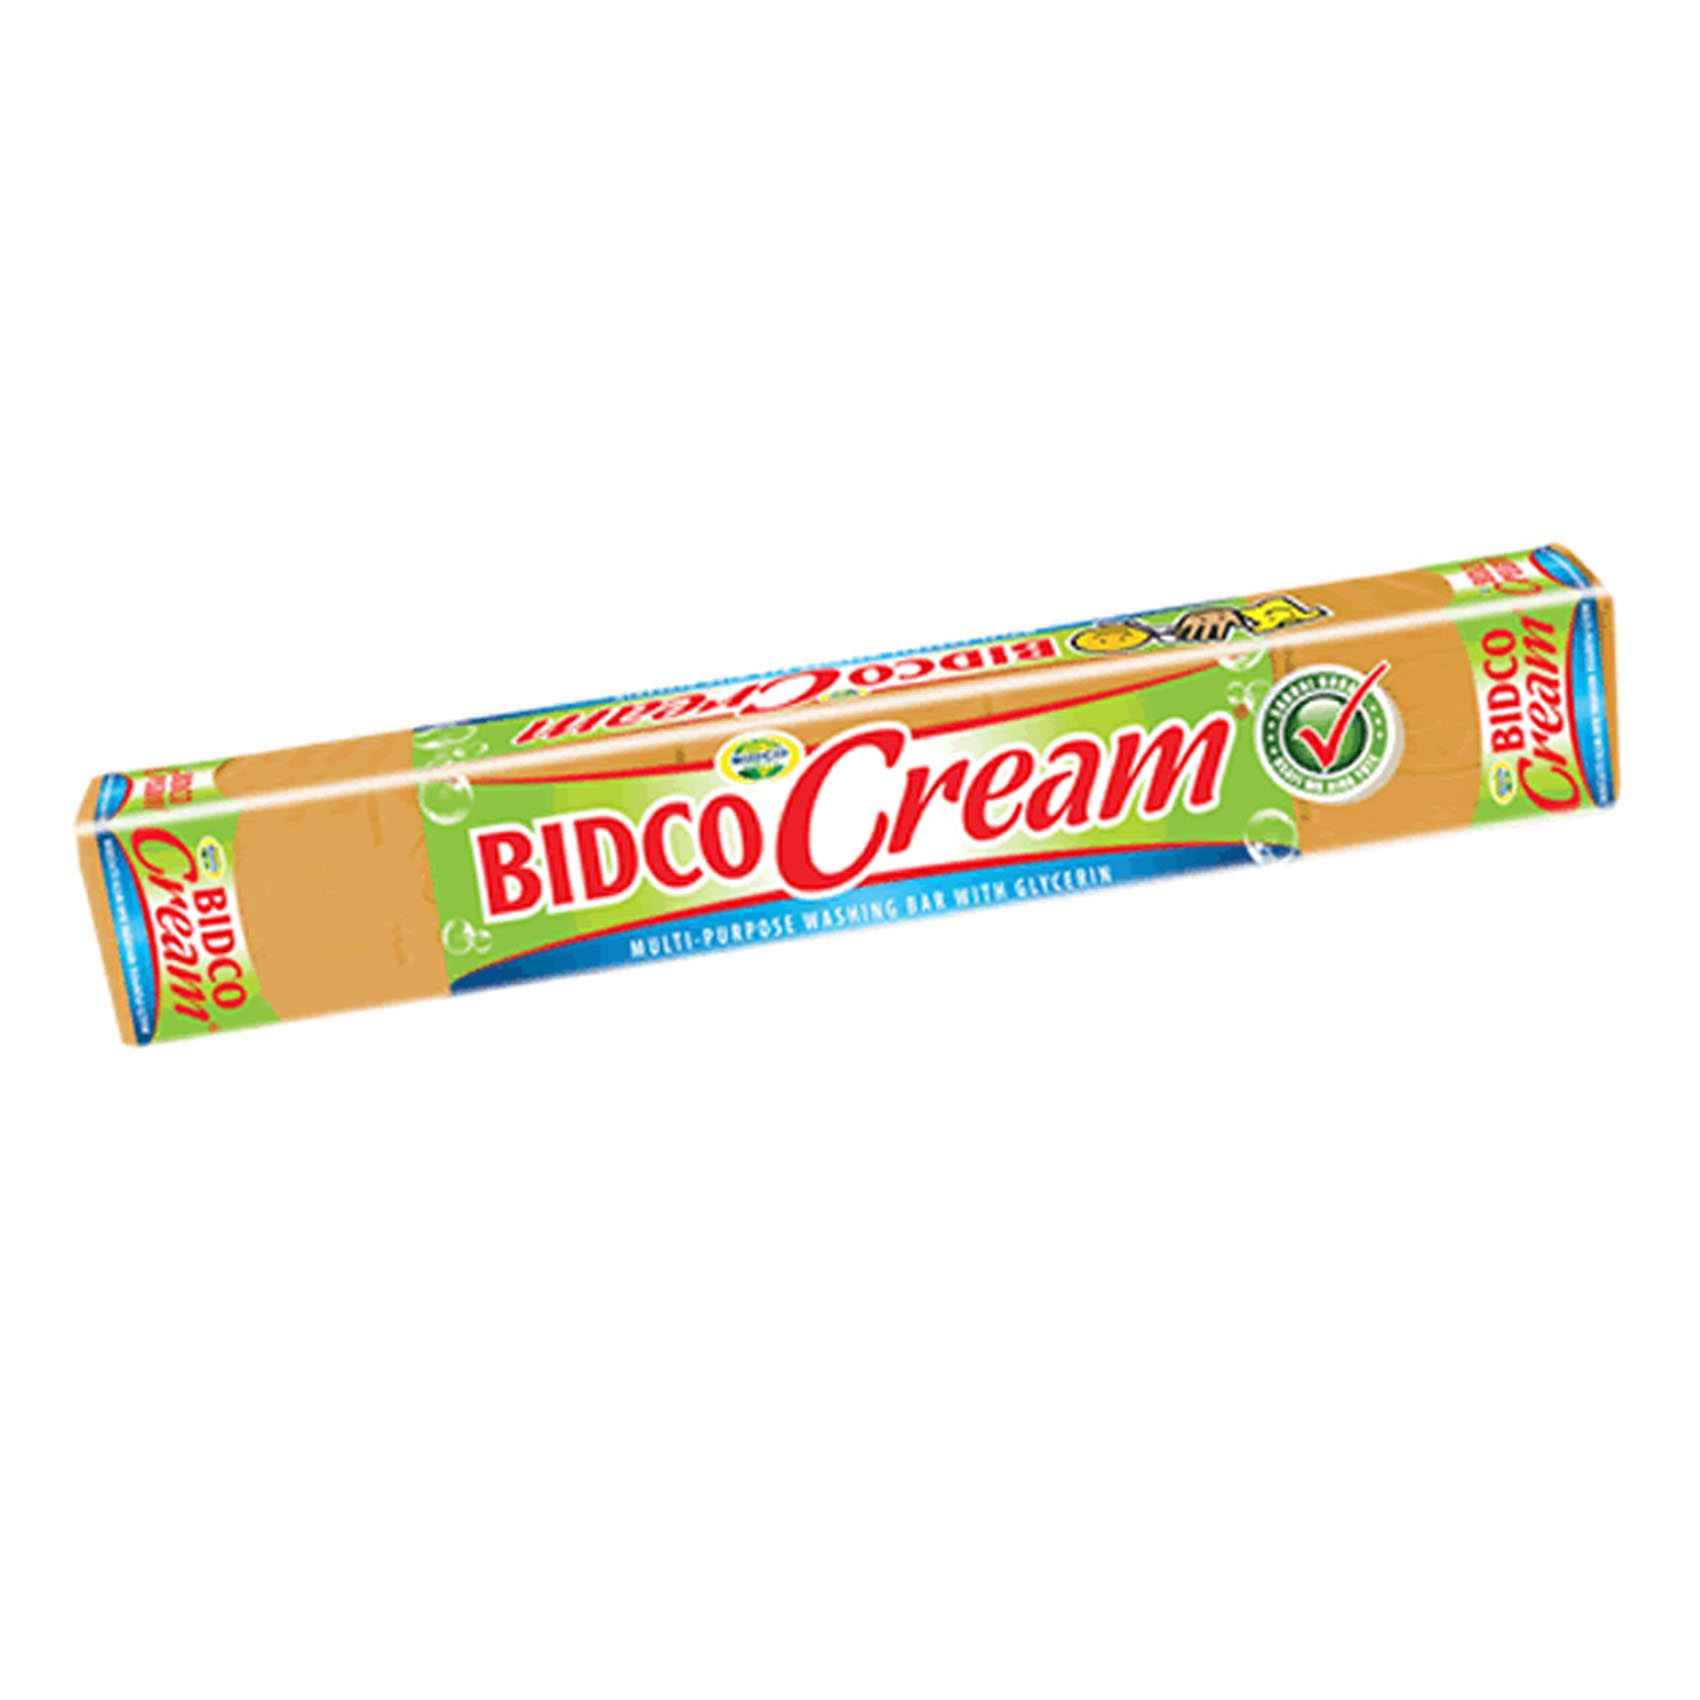 BIDCO CREAM LAUNDRY BAR SOAP 800G